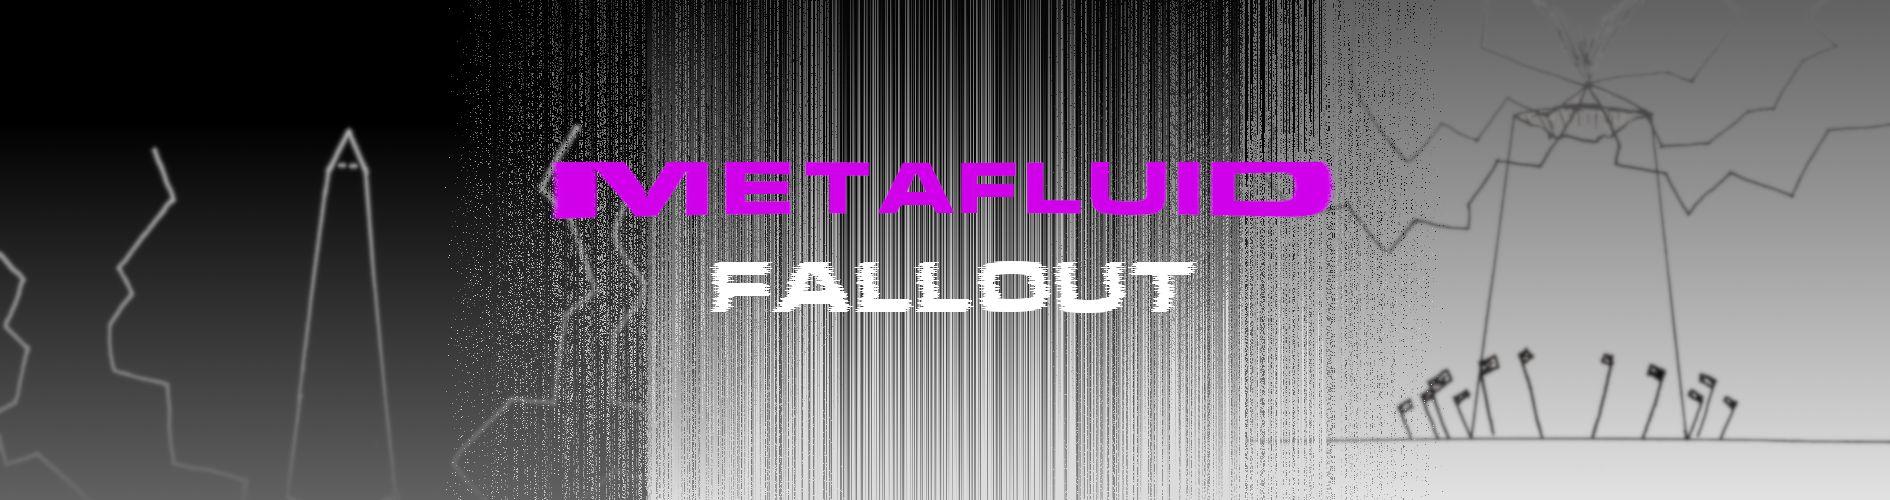 METAFLUID FALLOUT